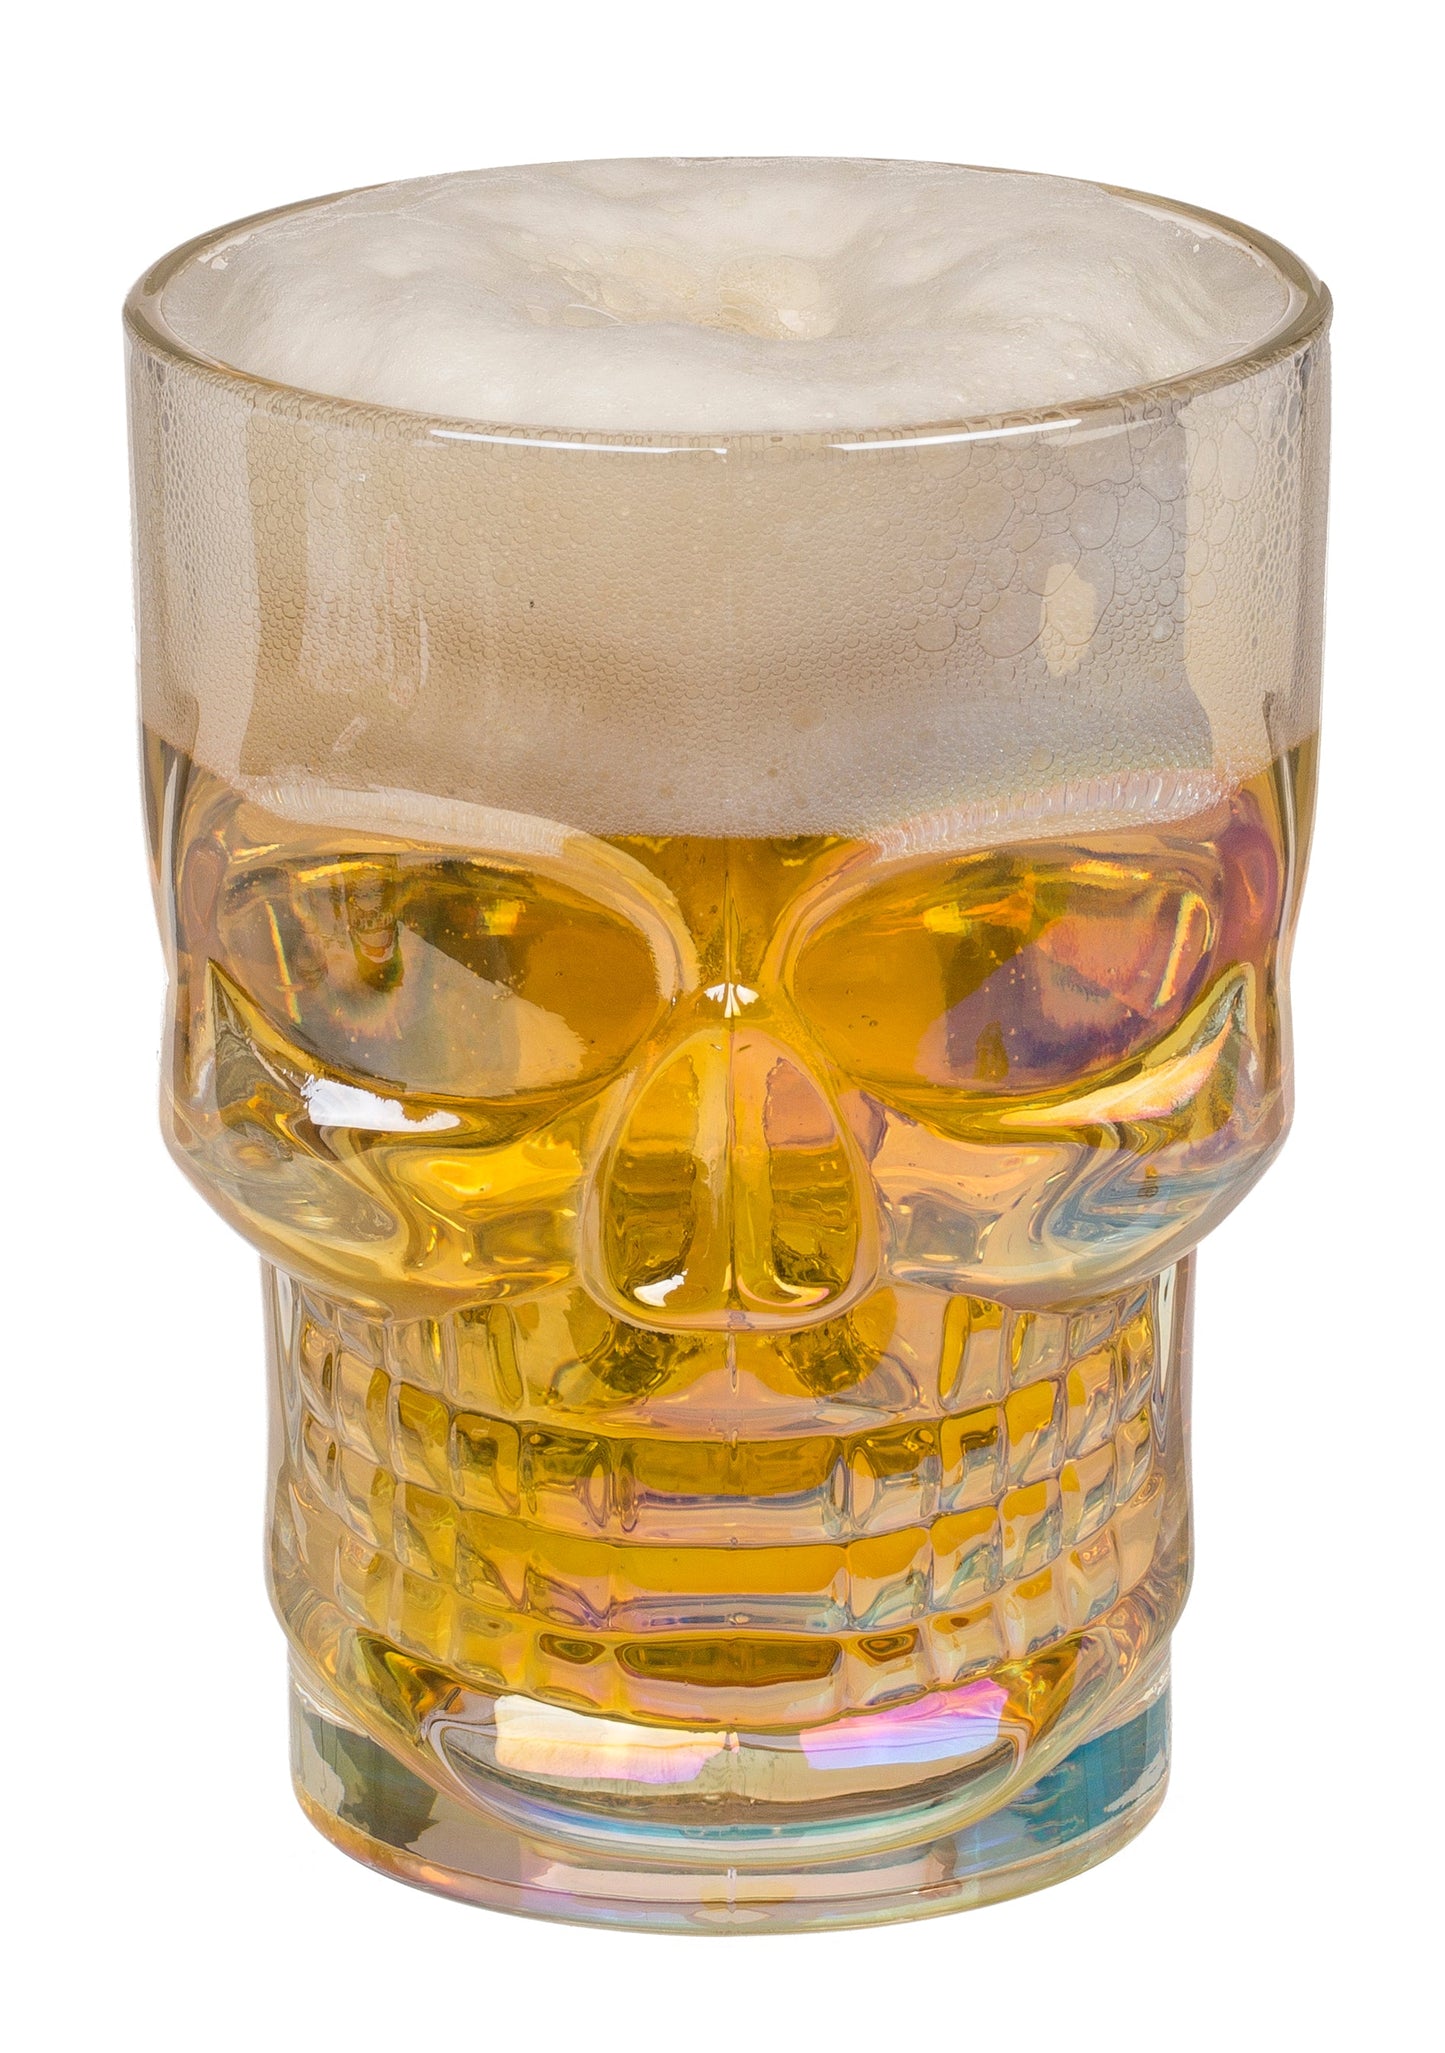 Skull Beer Mug - Beer Jug 500ml